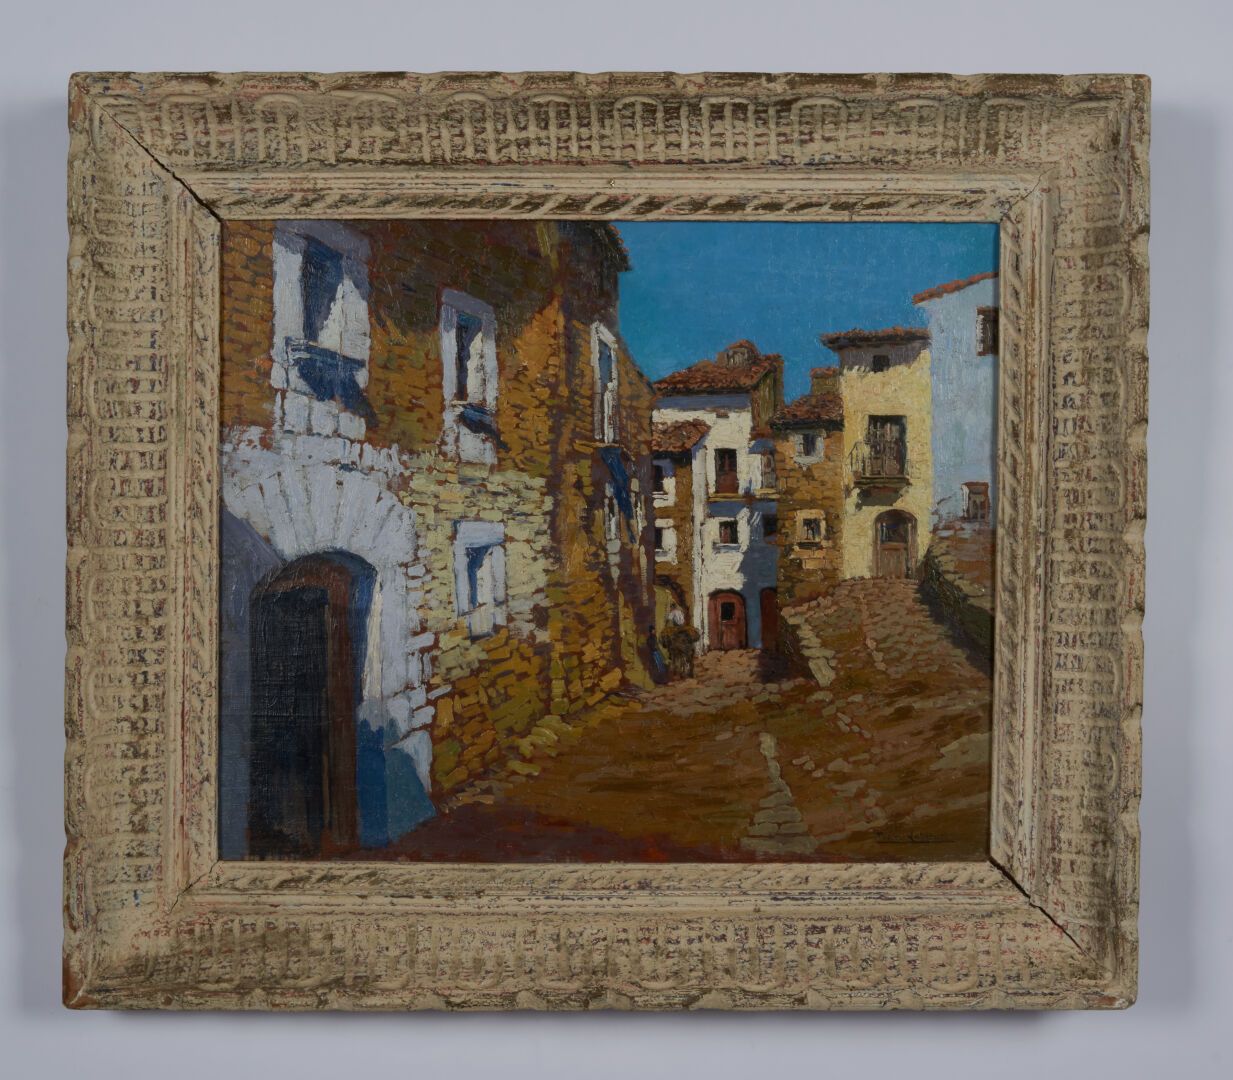 Null 拉布罗什-皮埃尔 (1876-1956)

"纳瓦拉村"，面板油画，右下角签名 - 37 x 46